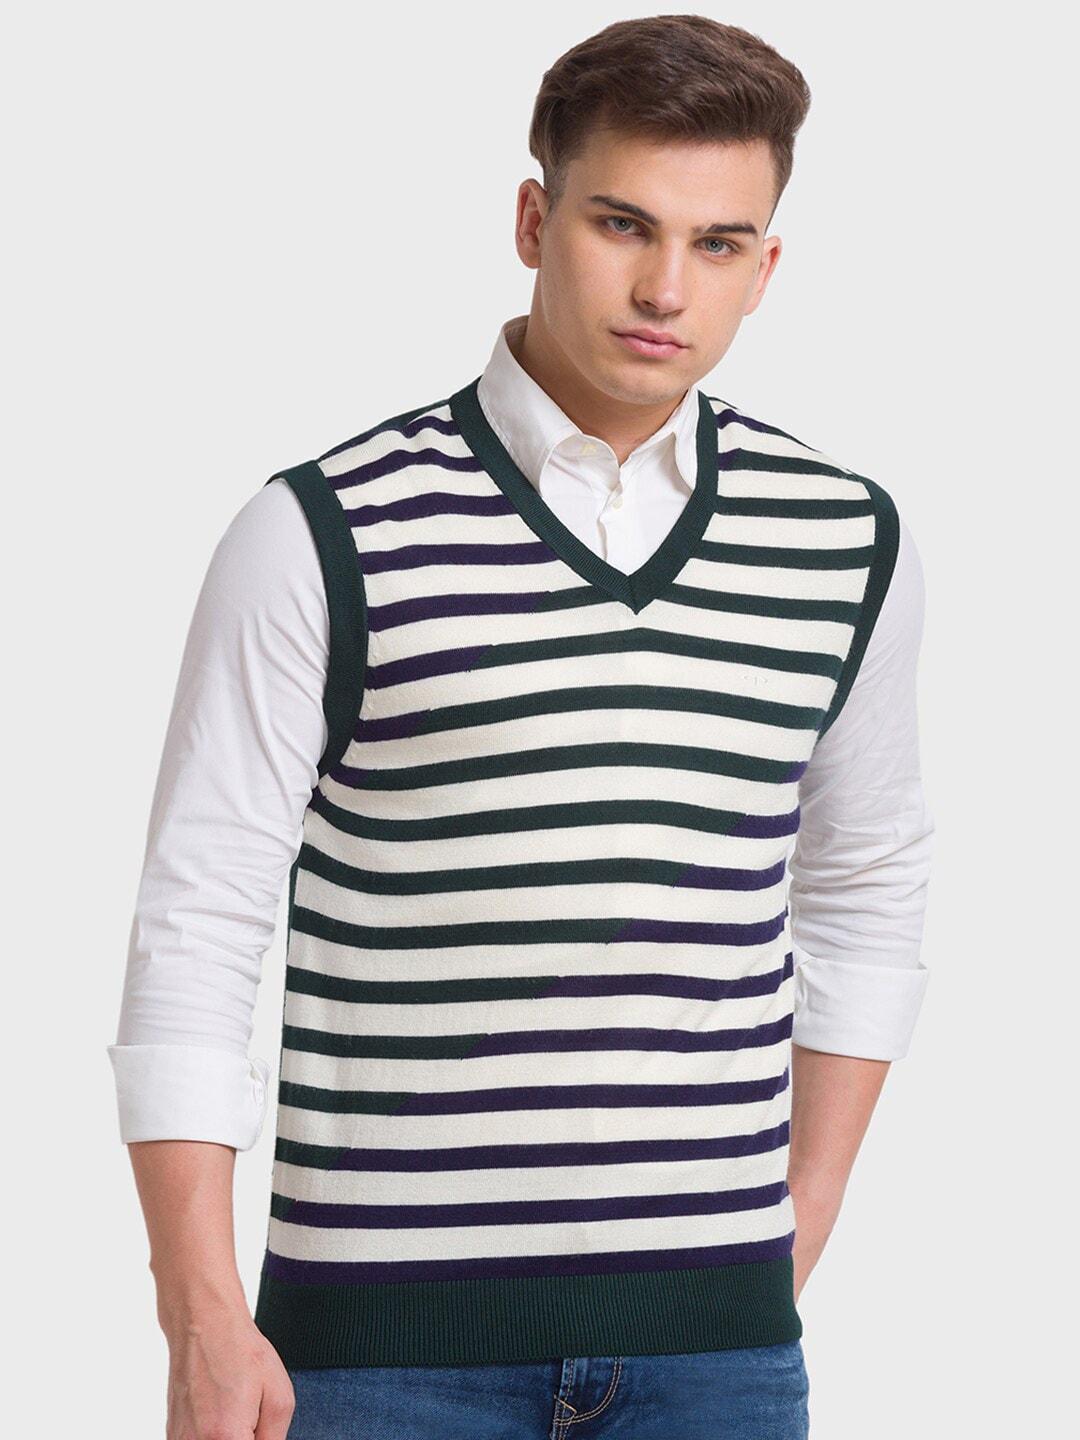 ColorPlus Striped Sweater Vest